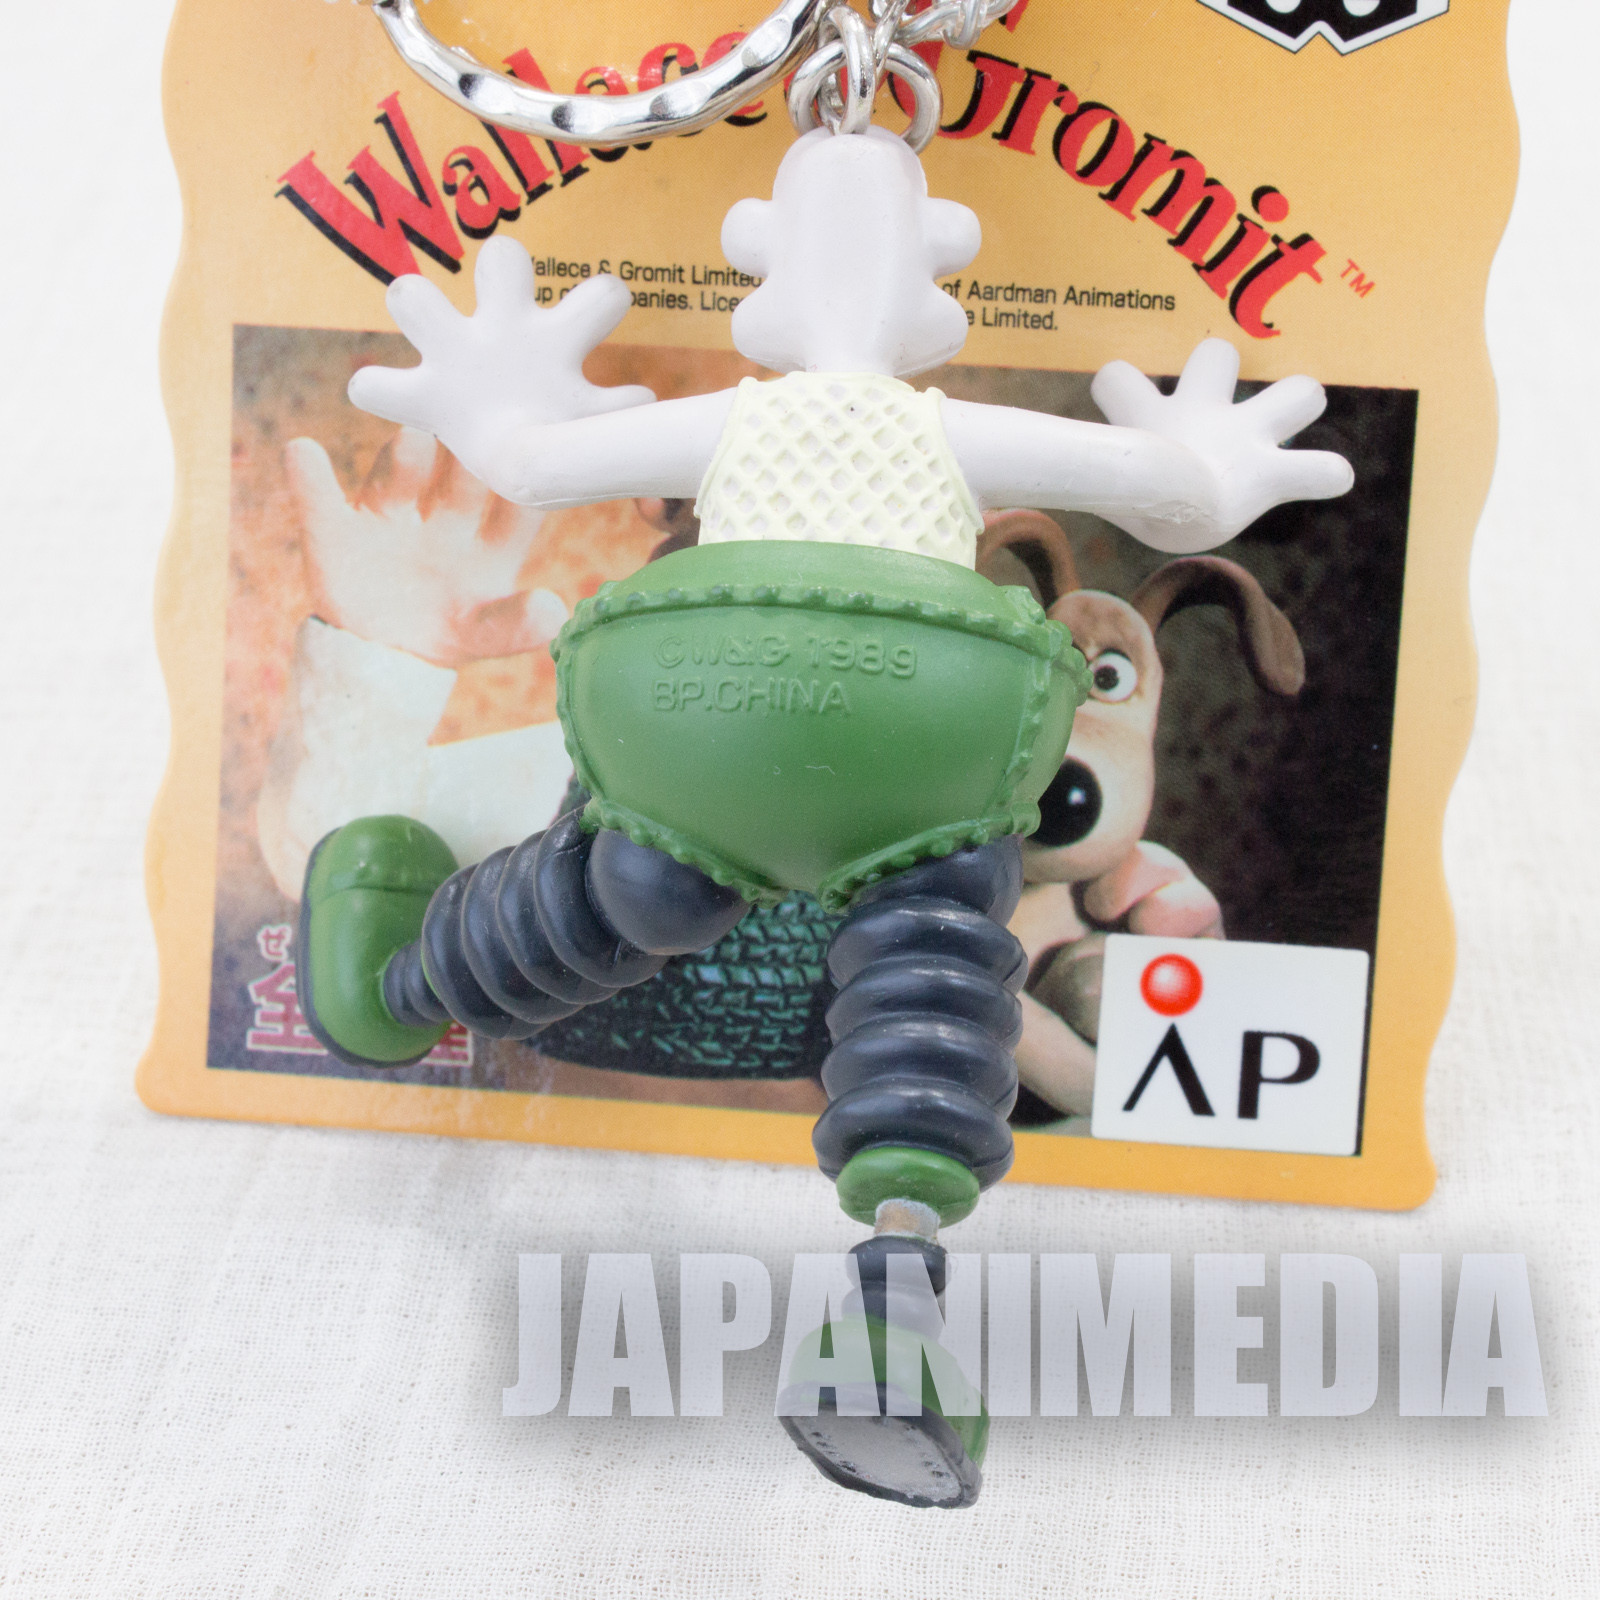 Wallace & Gromit WALLACE Figure Key Chain Banpresto JAPAN Ardman ANIME